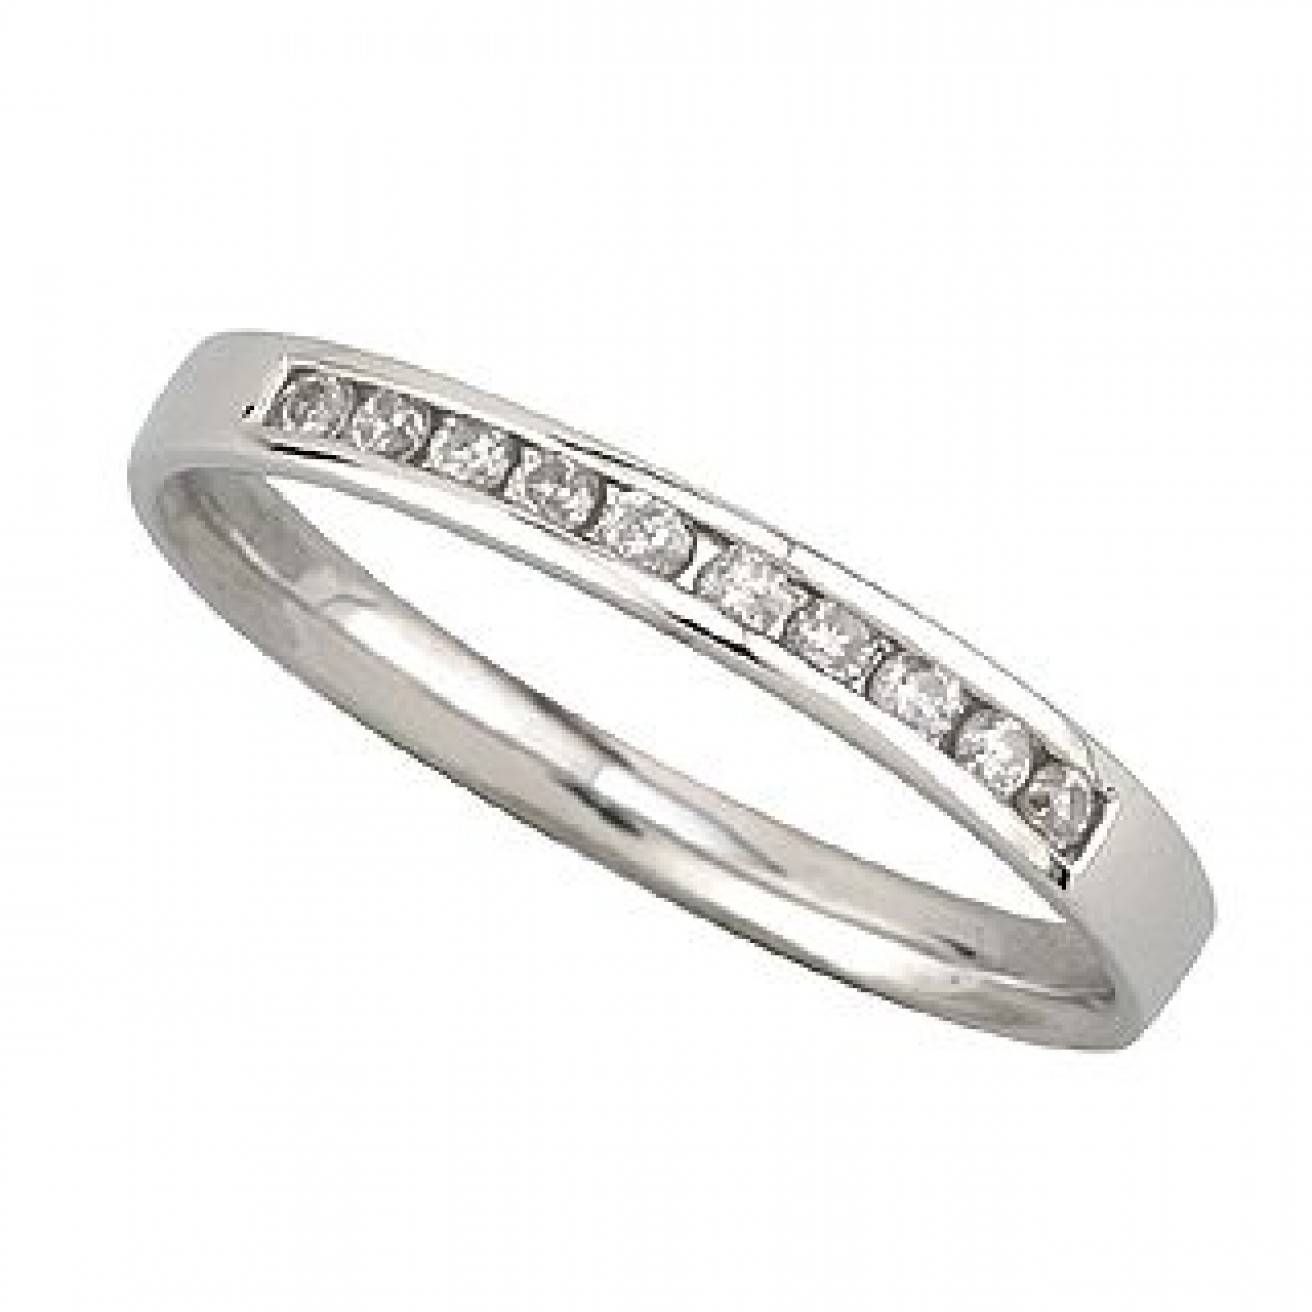 Buy Platinum Wedding Bands Online – Fraser Hart Inside Diamond And Platinum Wedding Rings (View 14 of 15)